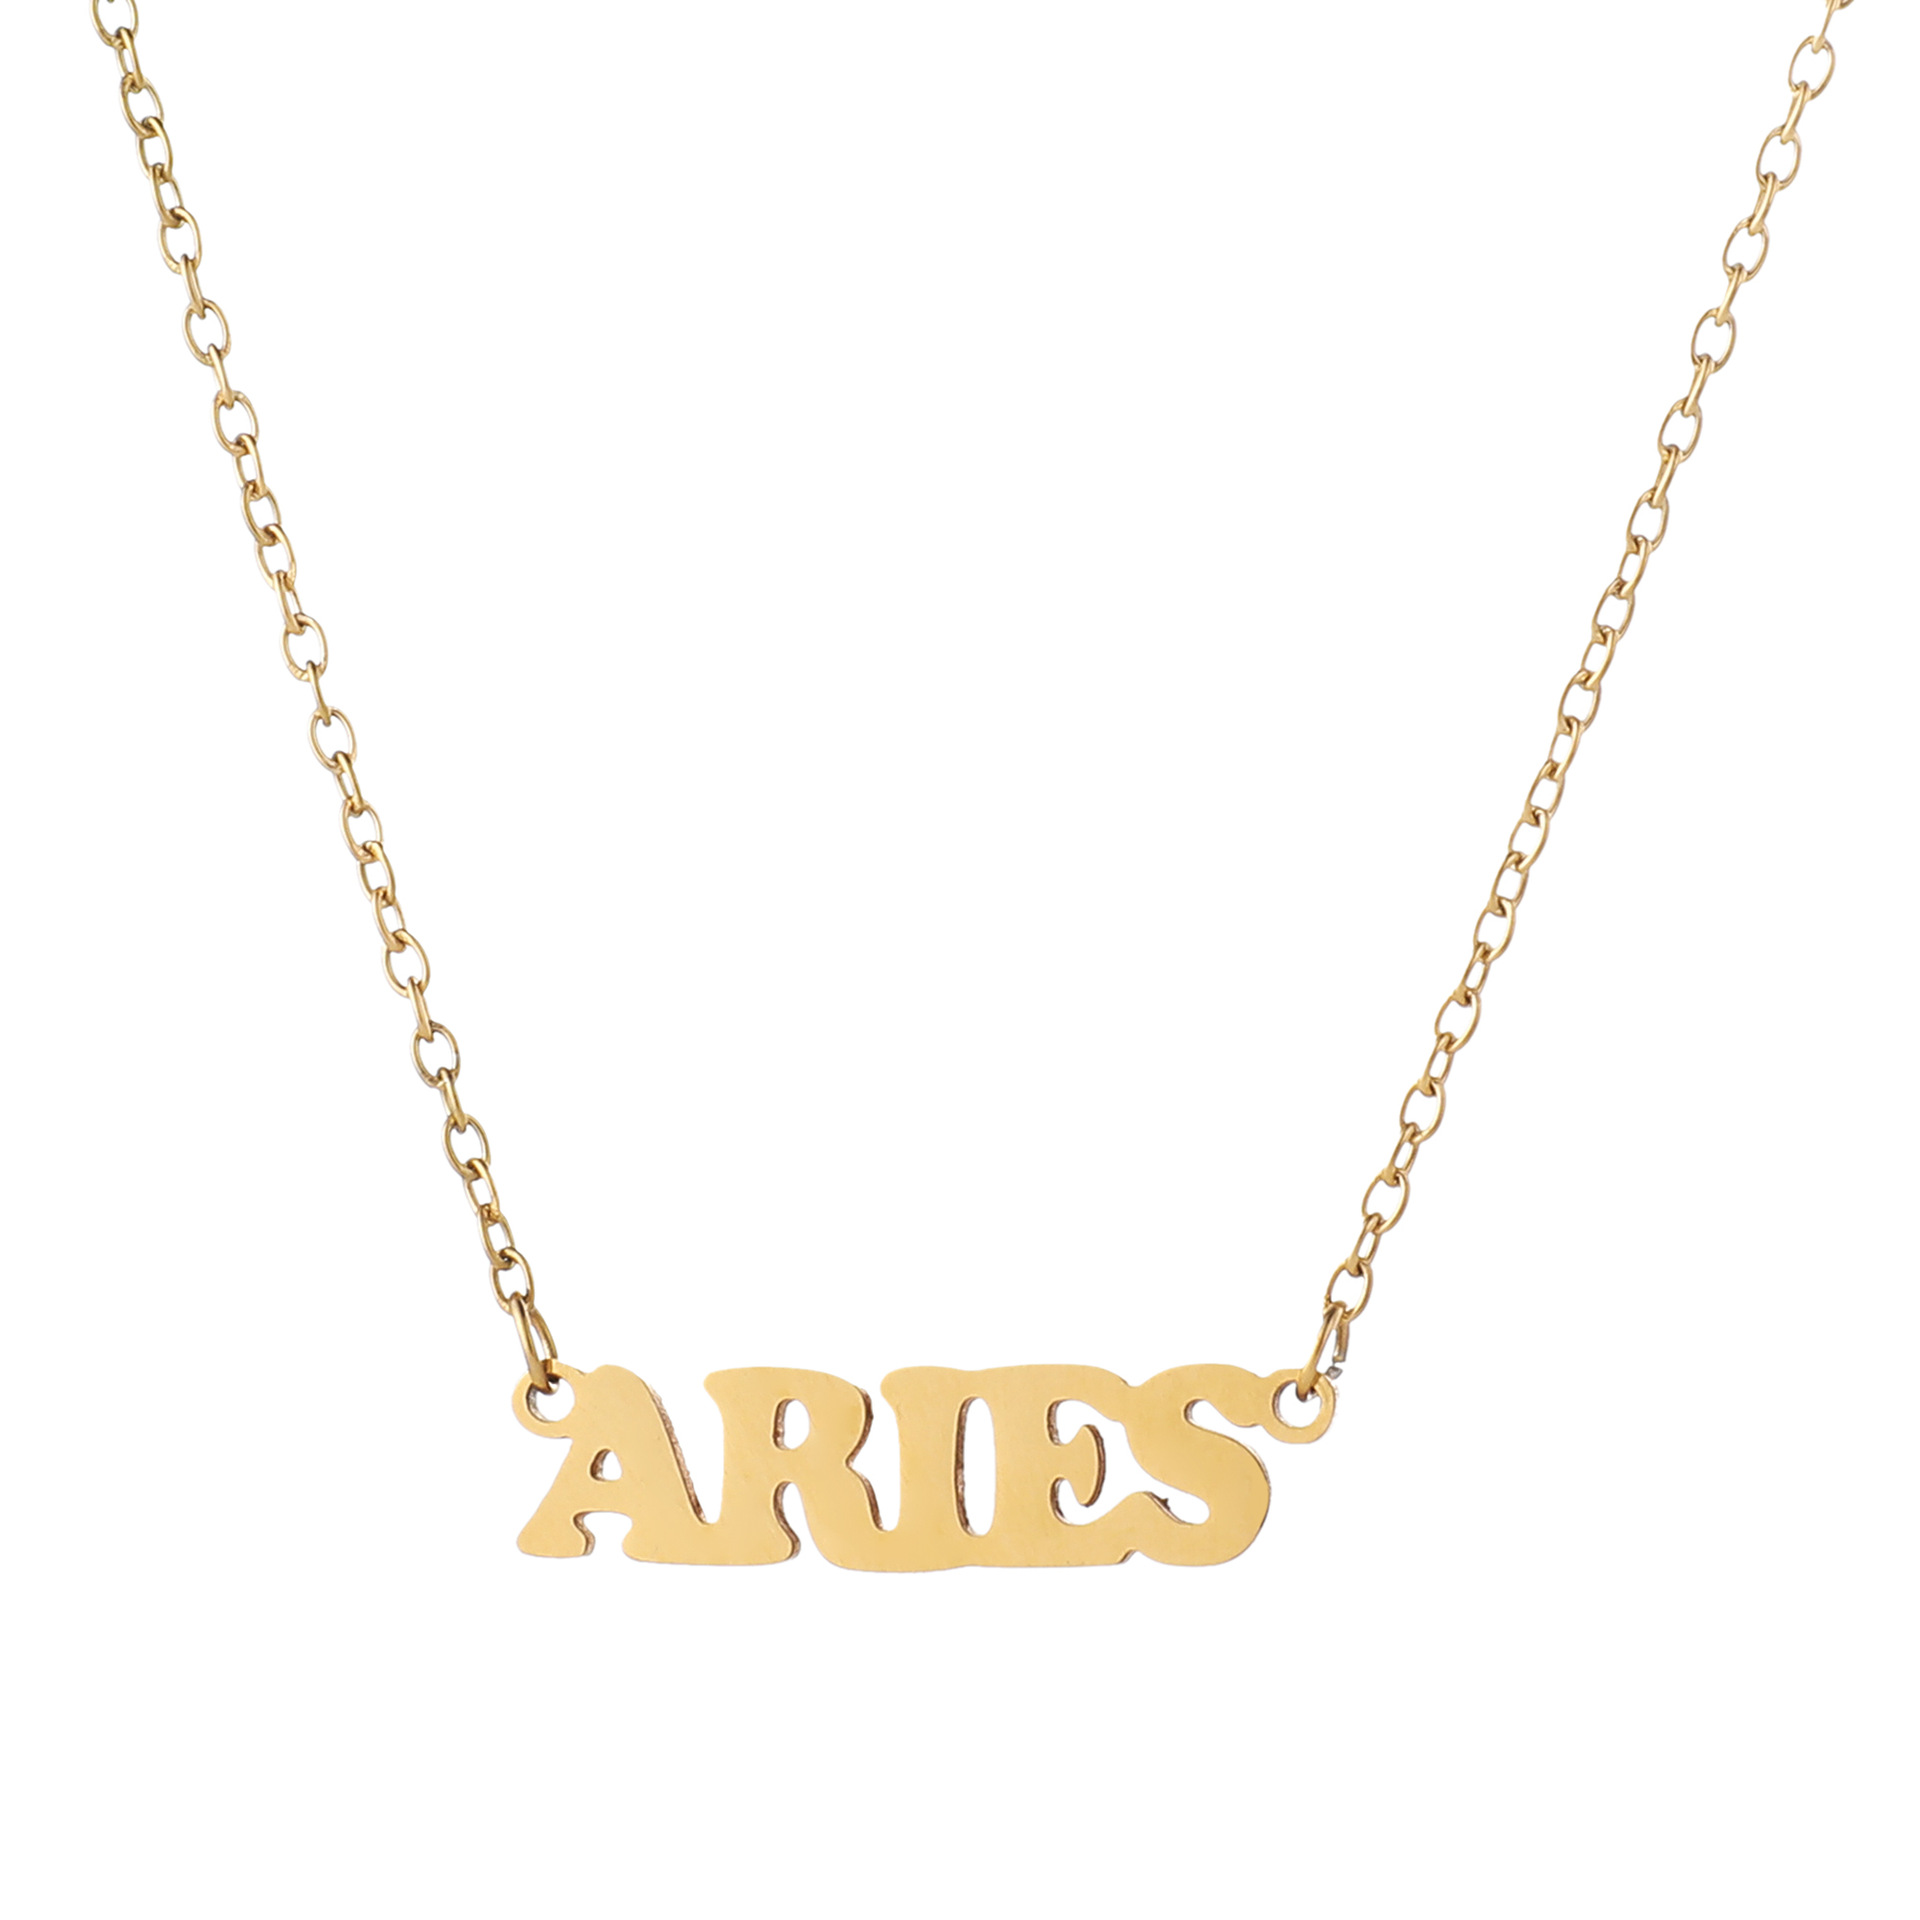 3:Aries